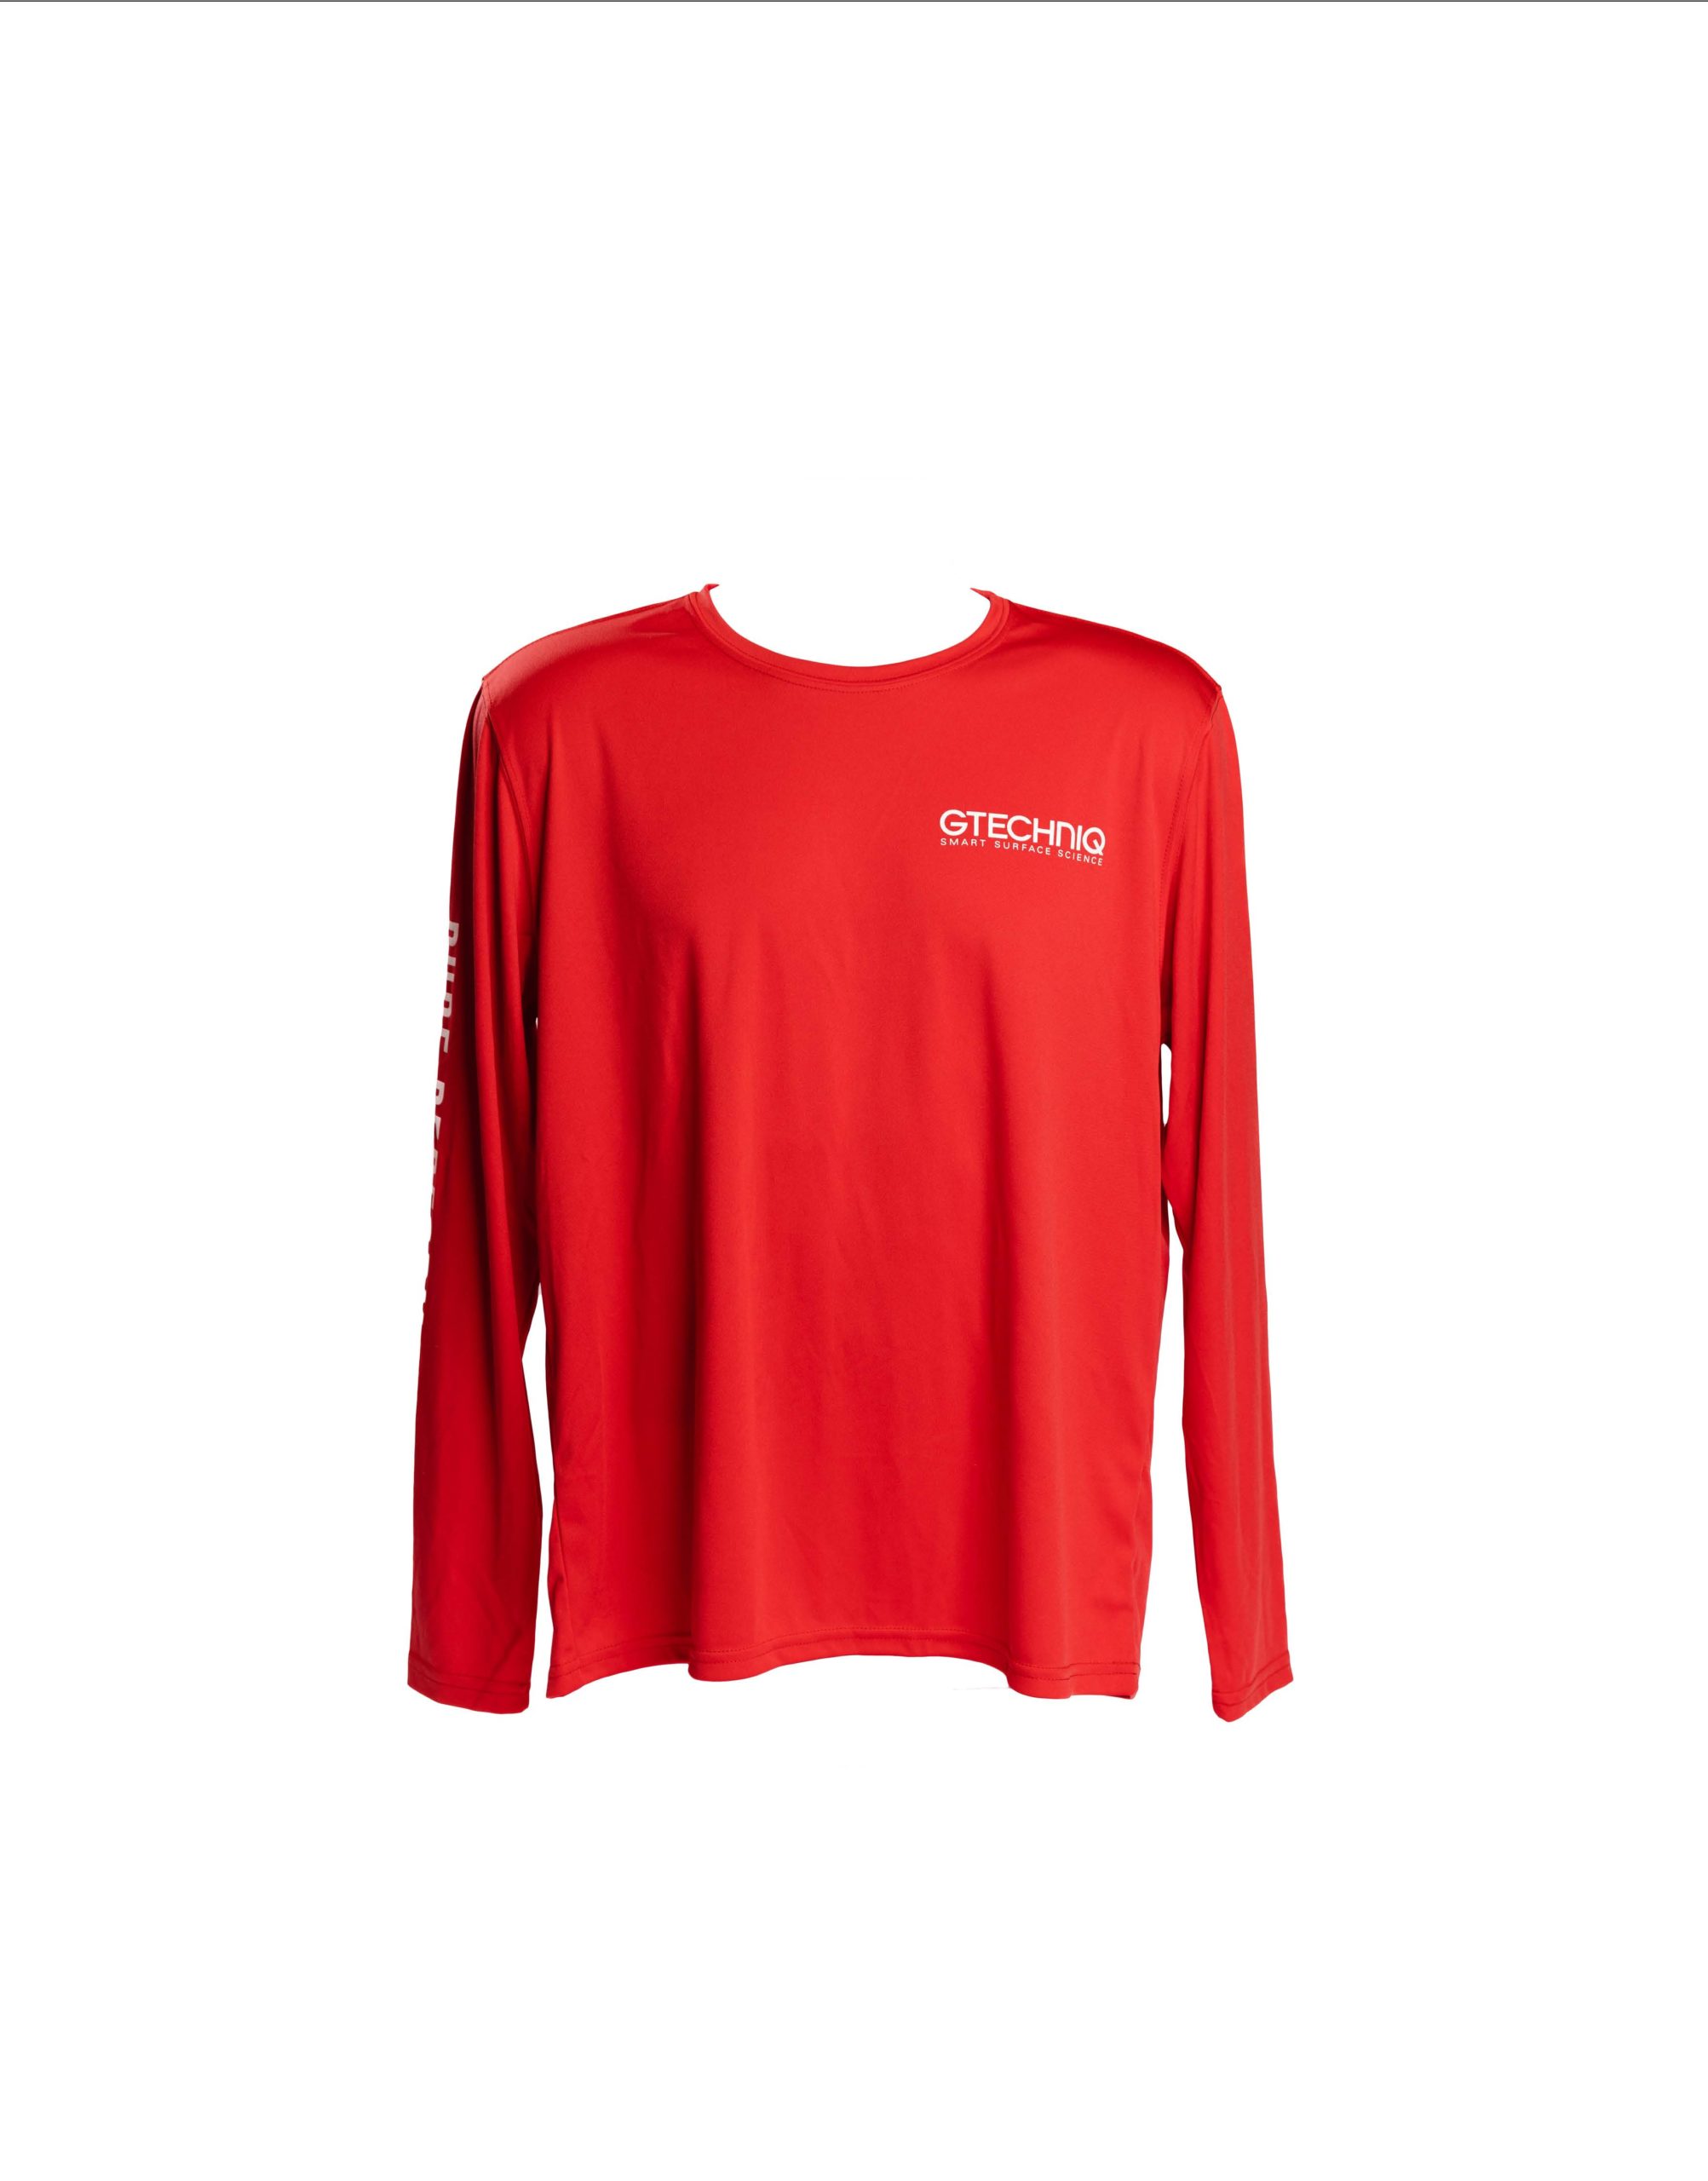 Long Sleeve Sun Protection Shirt - Gtechniq Red